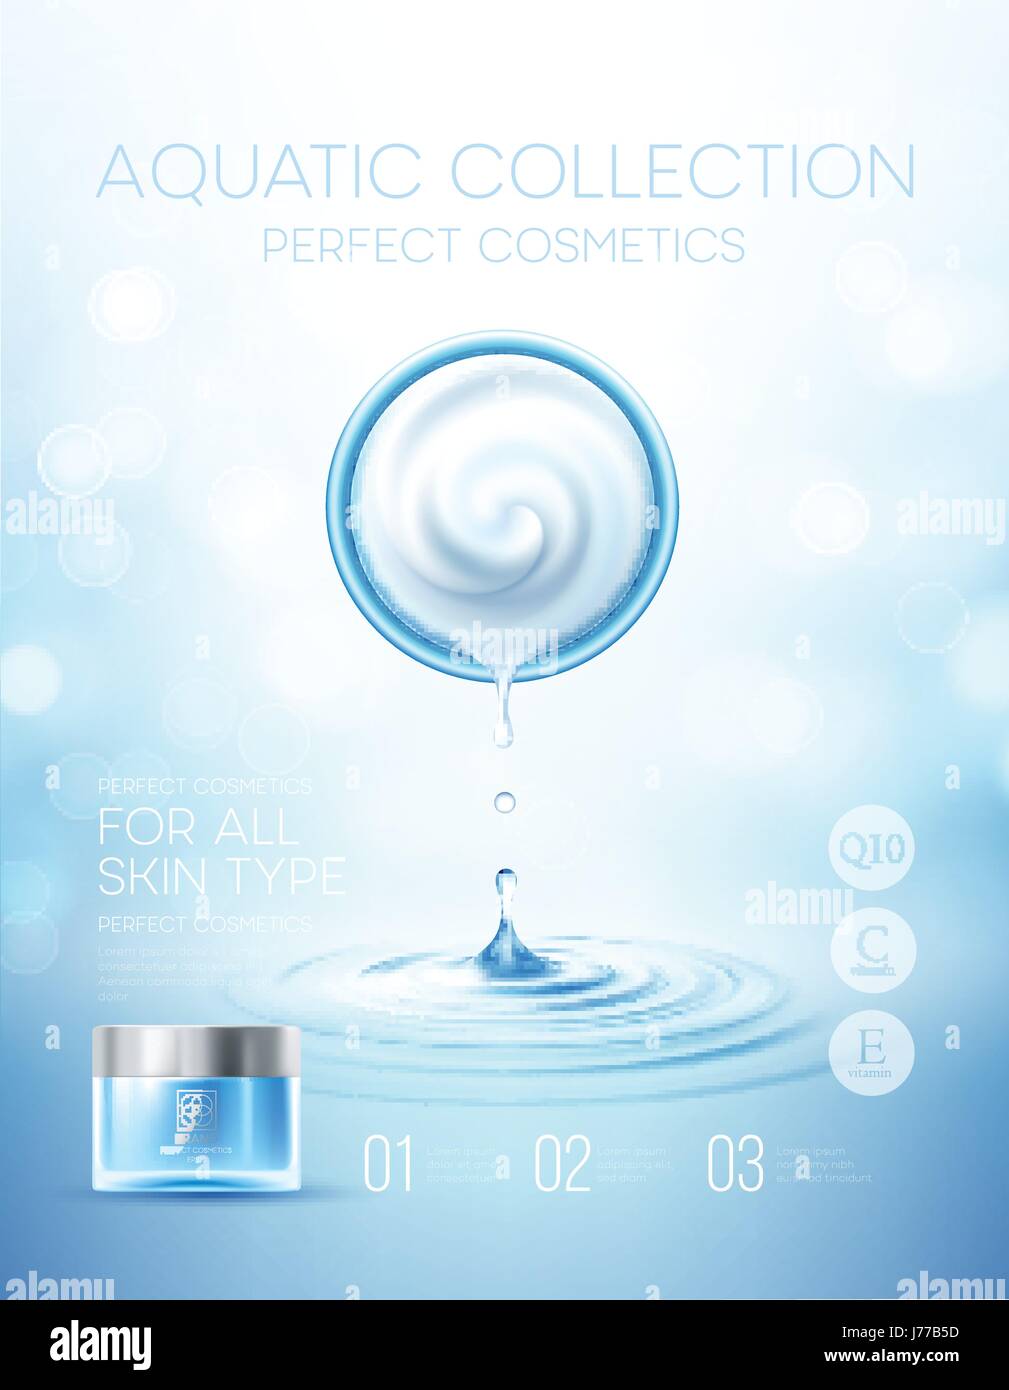 Design cosmetics product advertising. Vector illustration Stock Vector